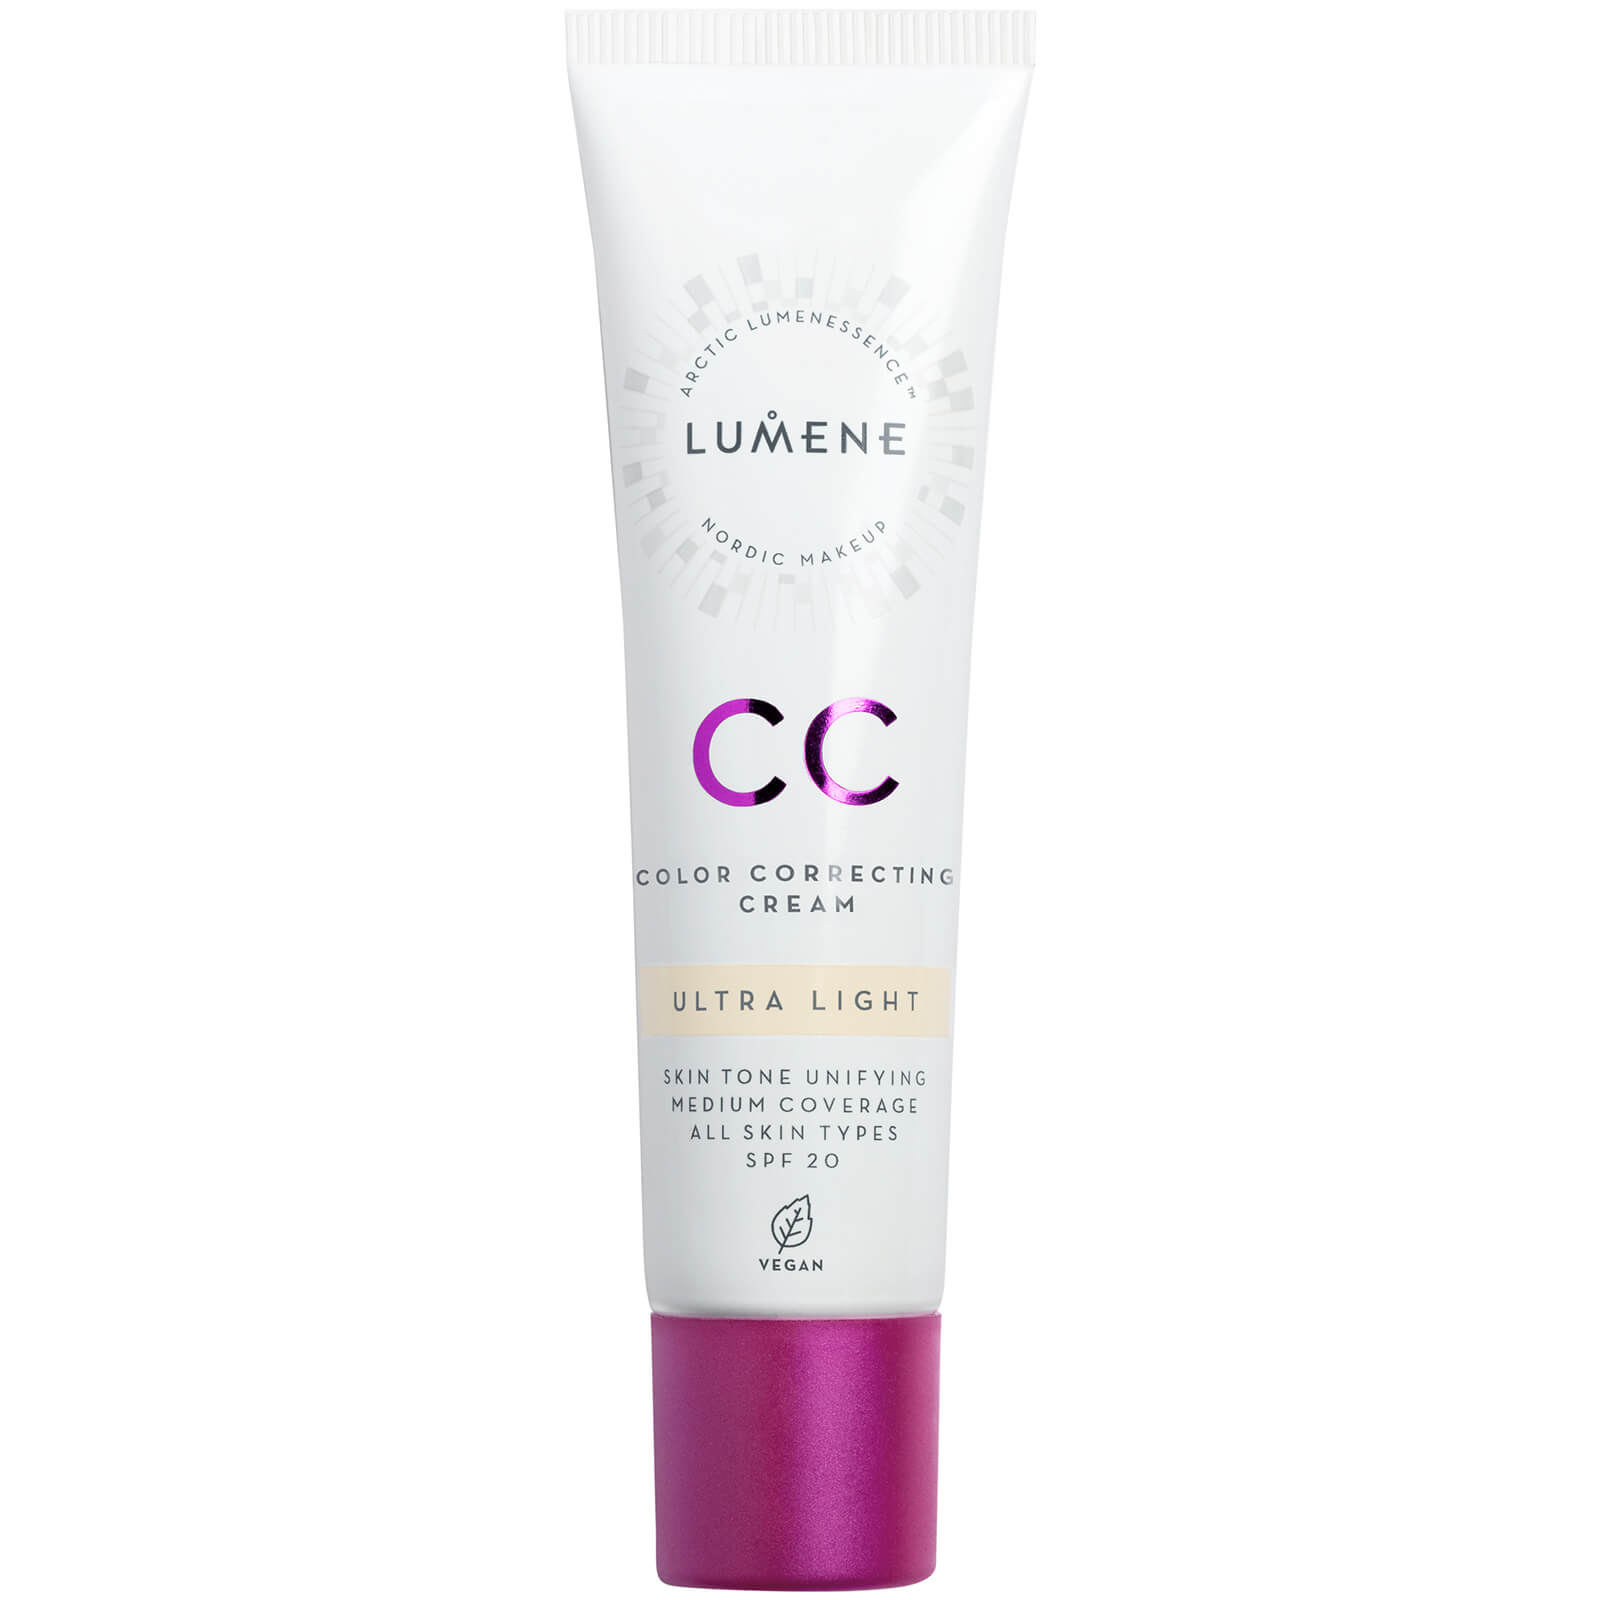 Lumene Cc Colour Correcting Cream Spf20 30ml (various Shades) - Ultra Light